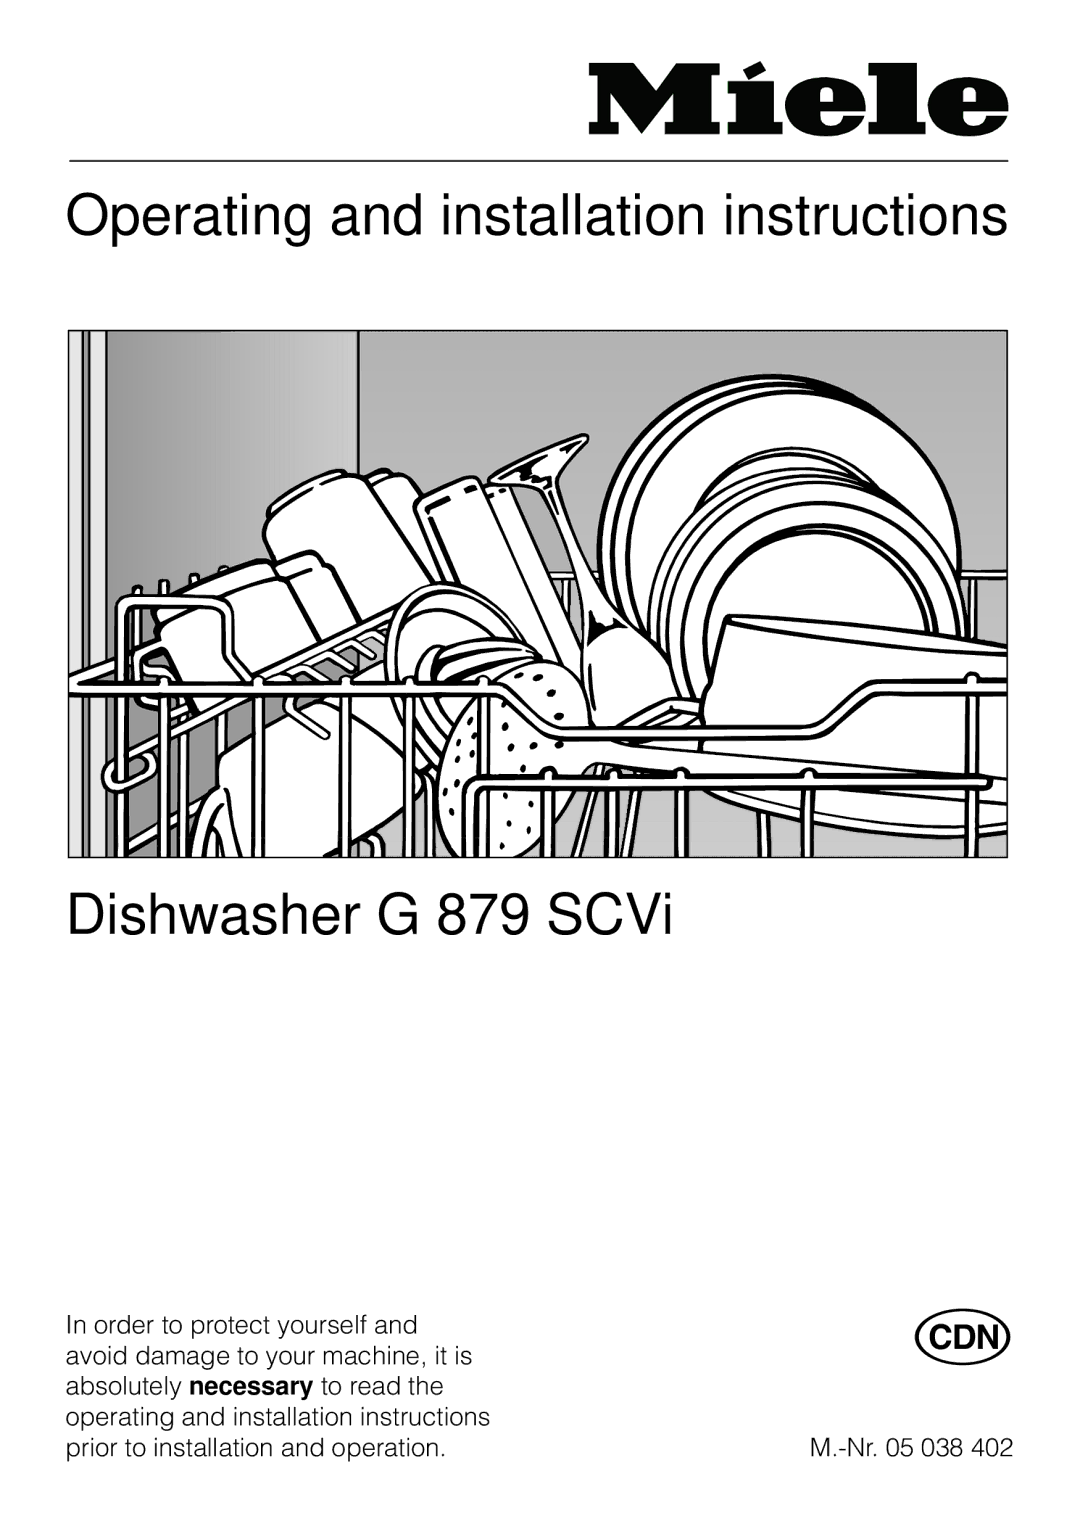 Miele G 879 SCVI installation instructions 